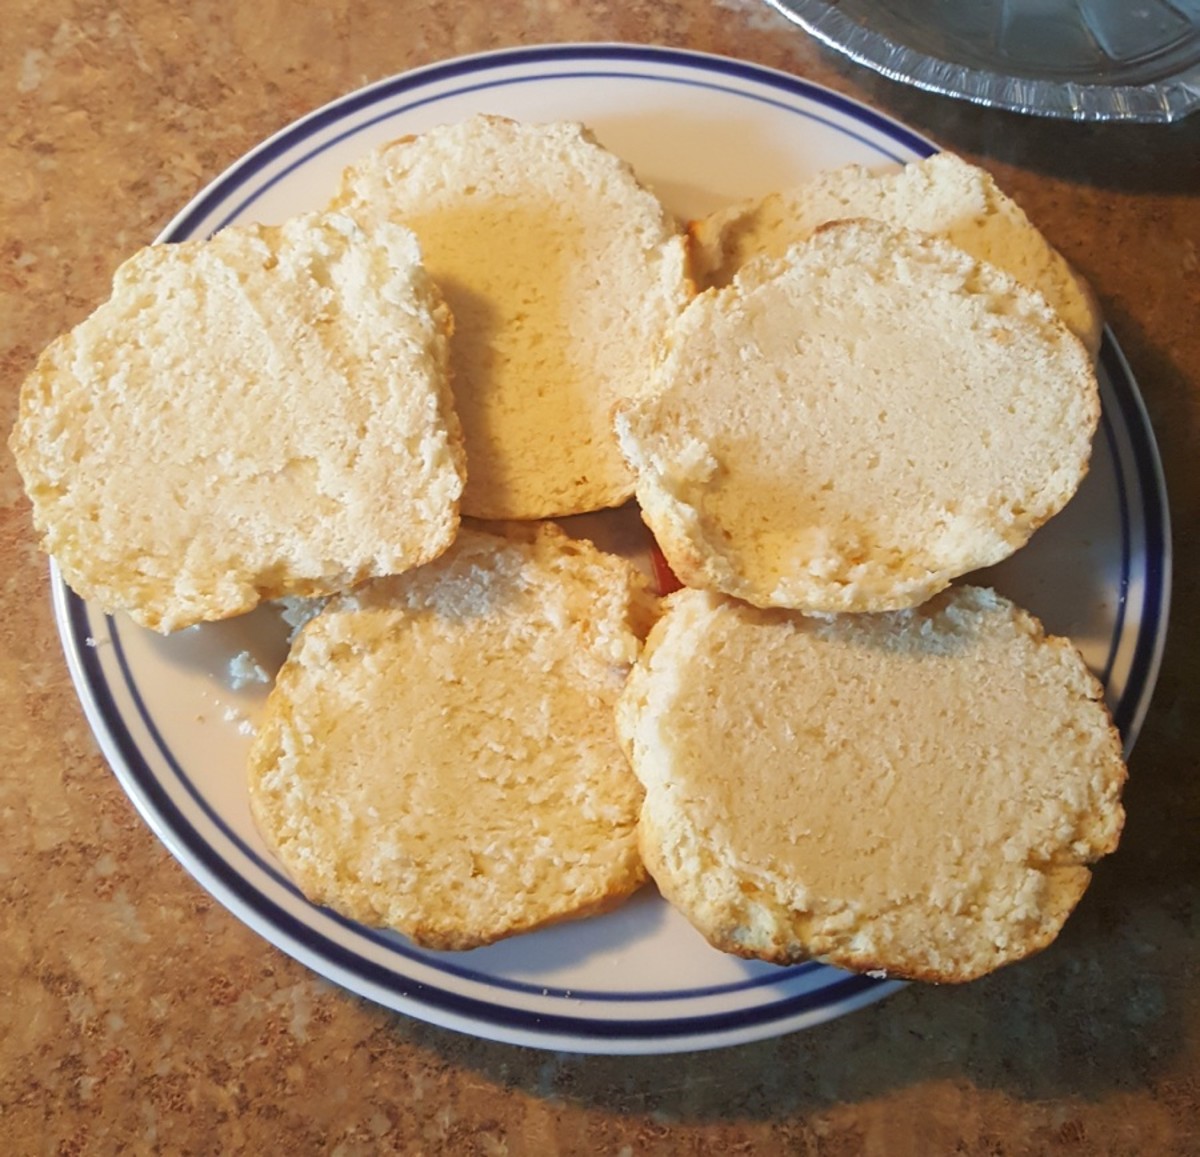 Cut each shortcake in half using a bread knife.